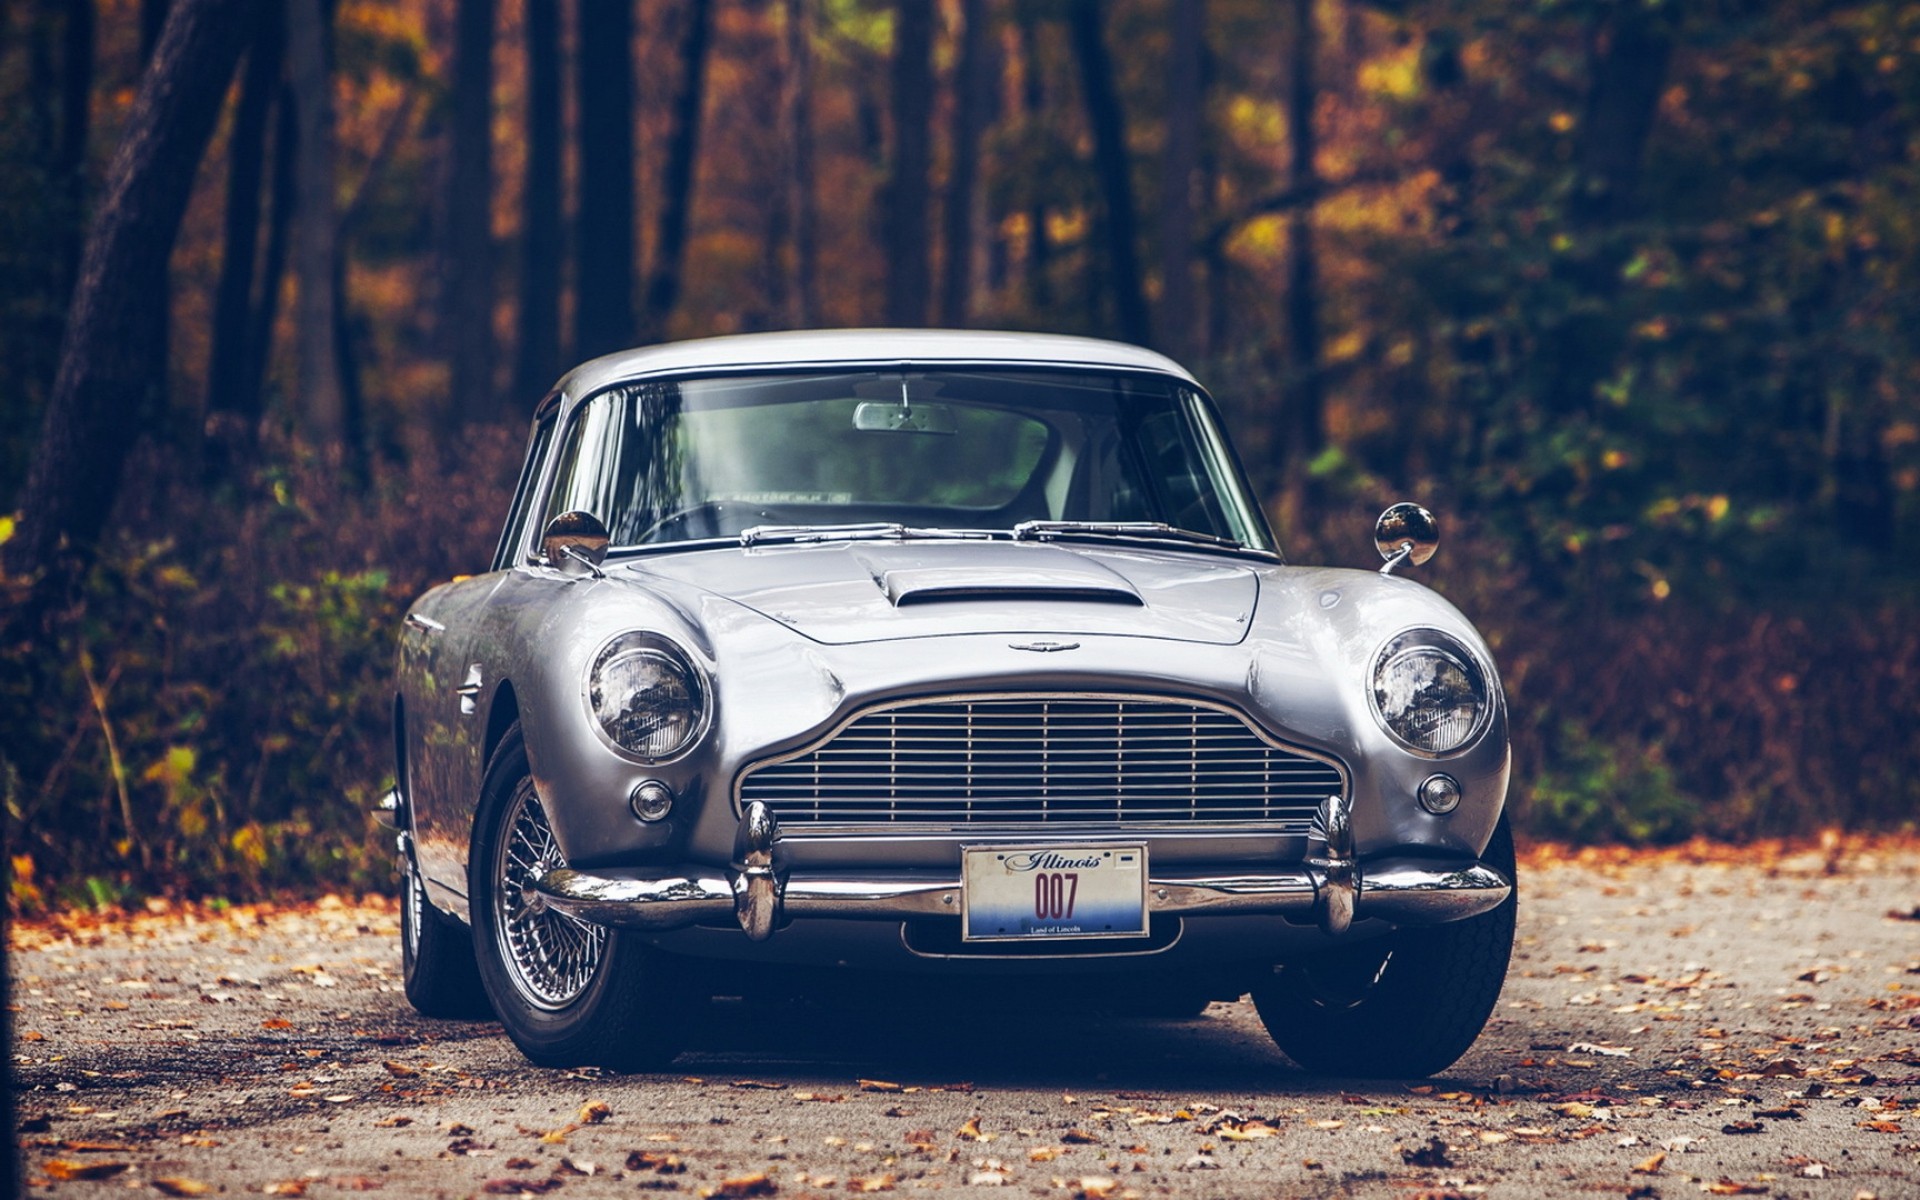 car, Aston Martin, Aston Martin DB5, Fall, Road, Forest, 007, James Bond, Leaves Wallpaper